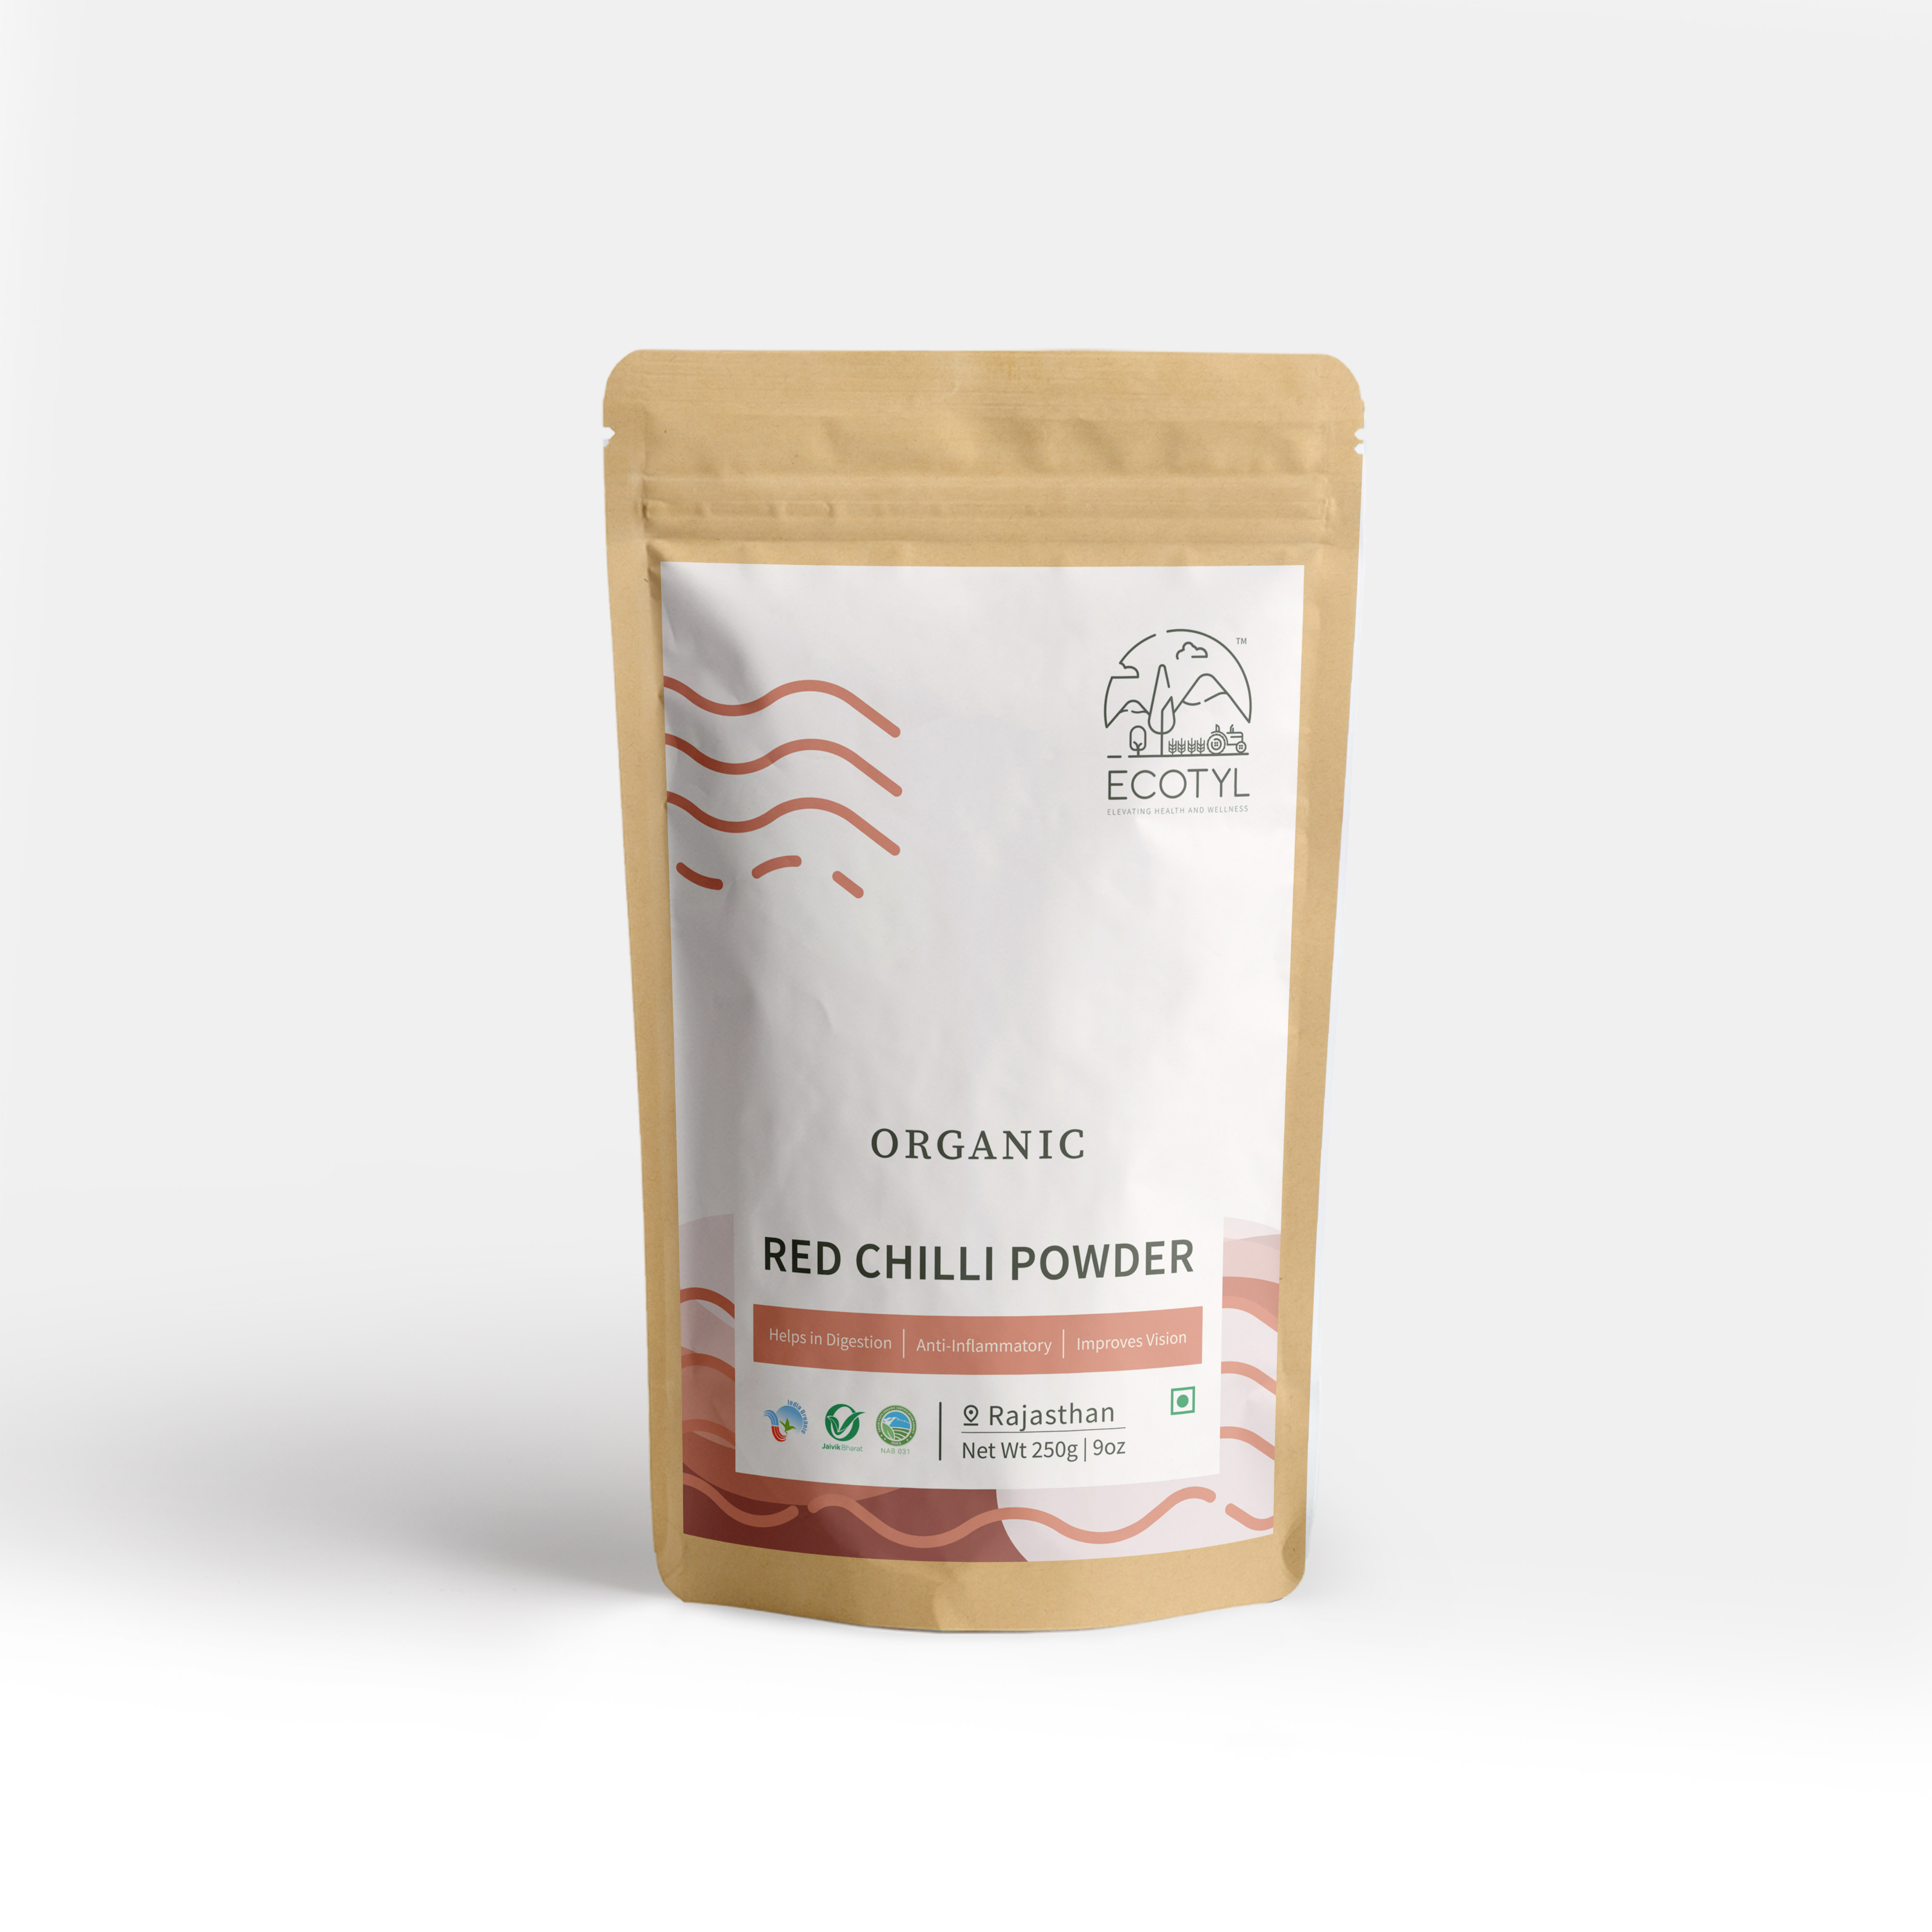 Buy Ecotyl Organic Red Chilli Powder - 250 g at Best Price Online